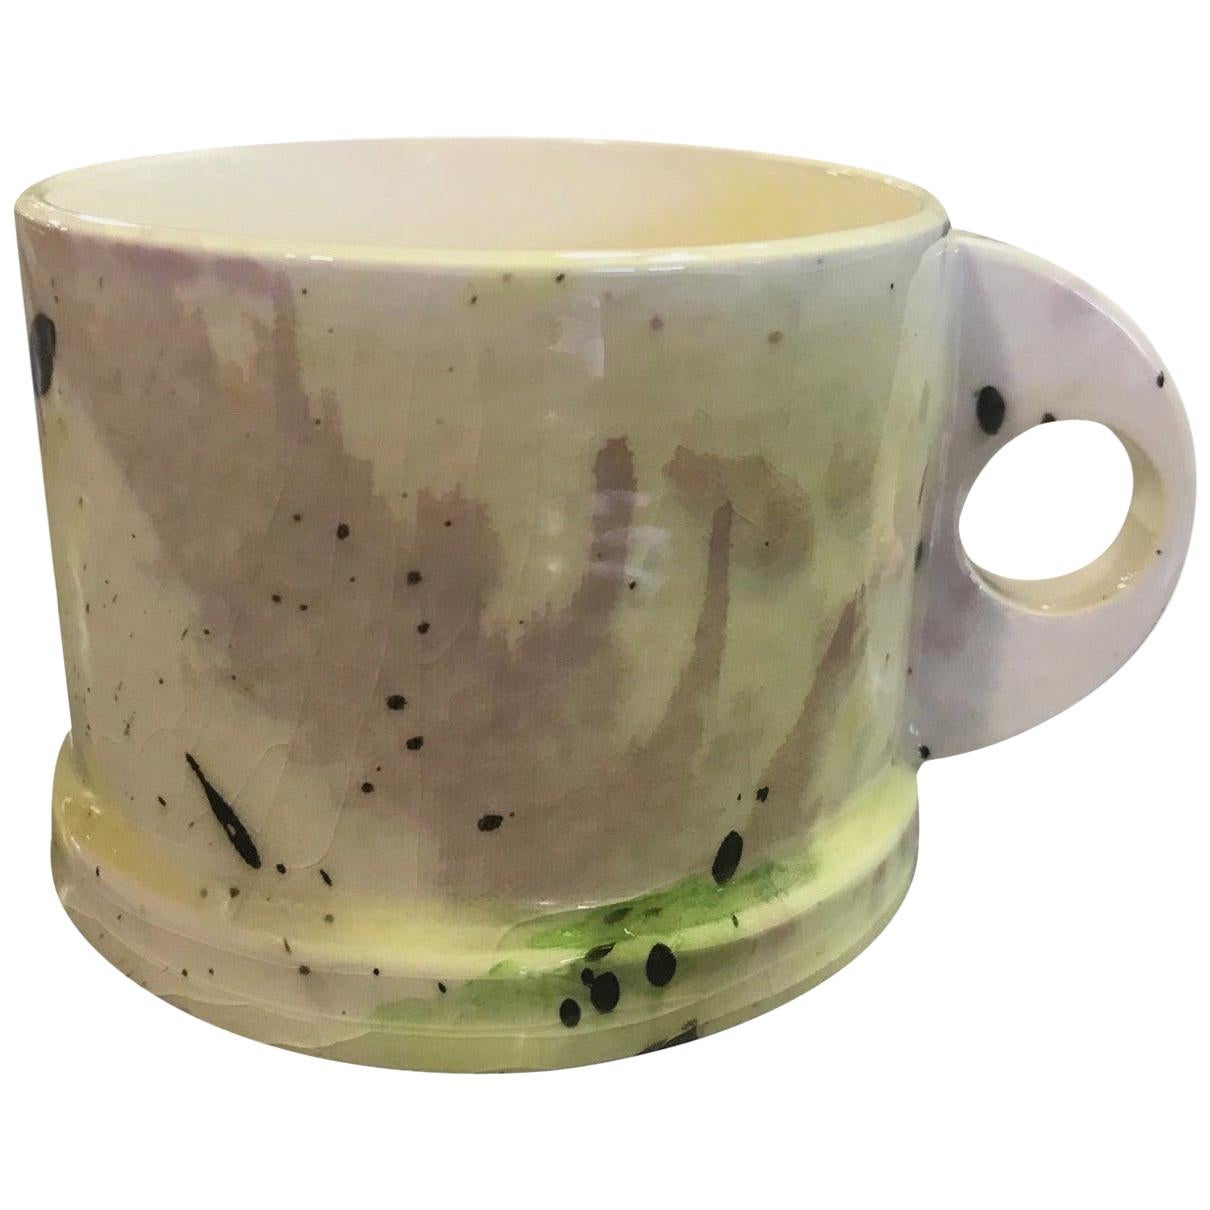 Peter Shire EXP Signed Ceramic Pottery Splatter Mug Cup Sculpture, Mid-1980s